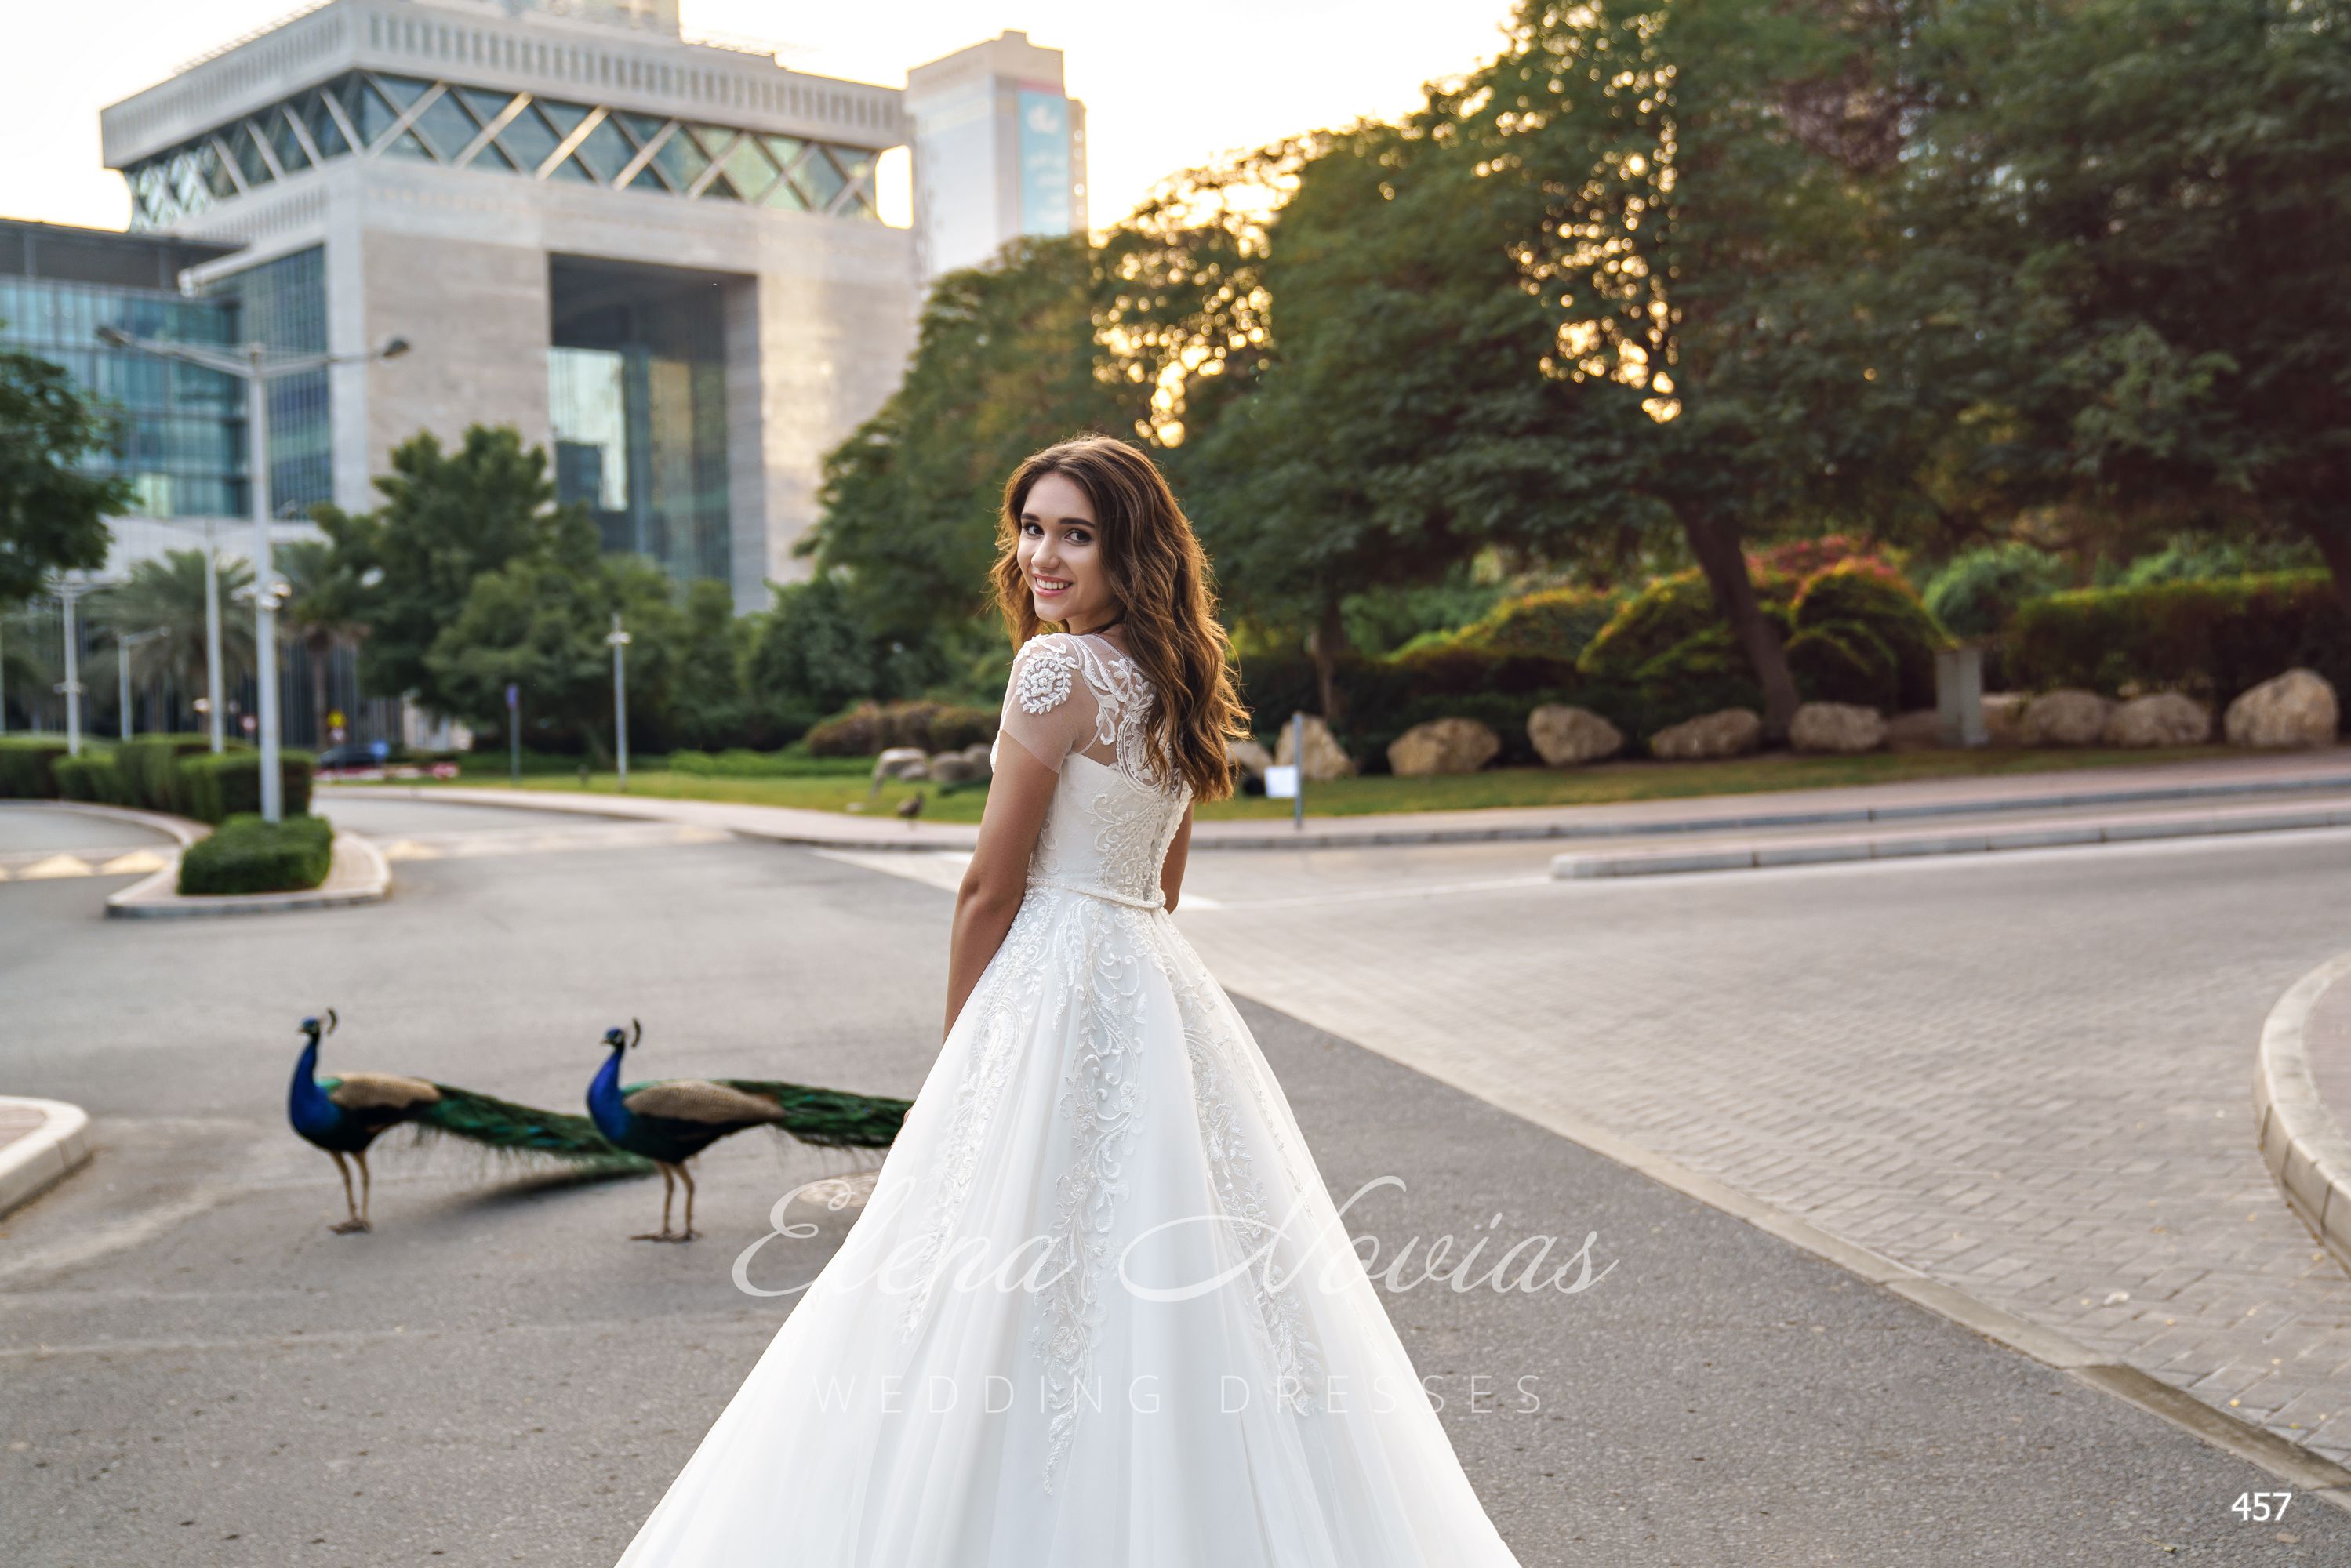 Wedding dresses 457 3